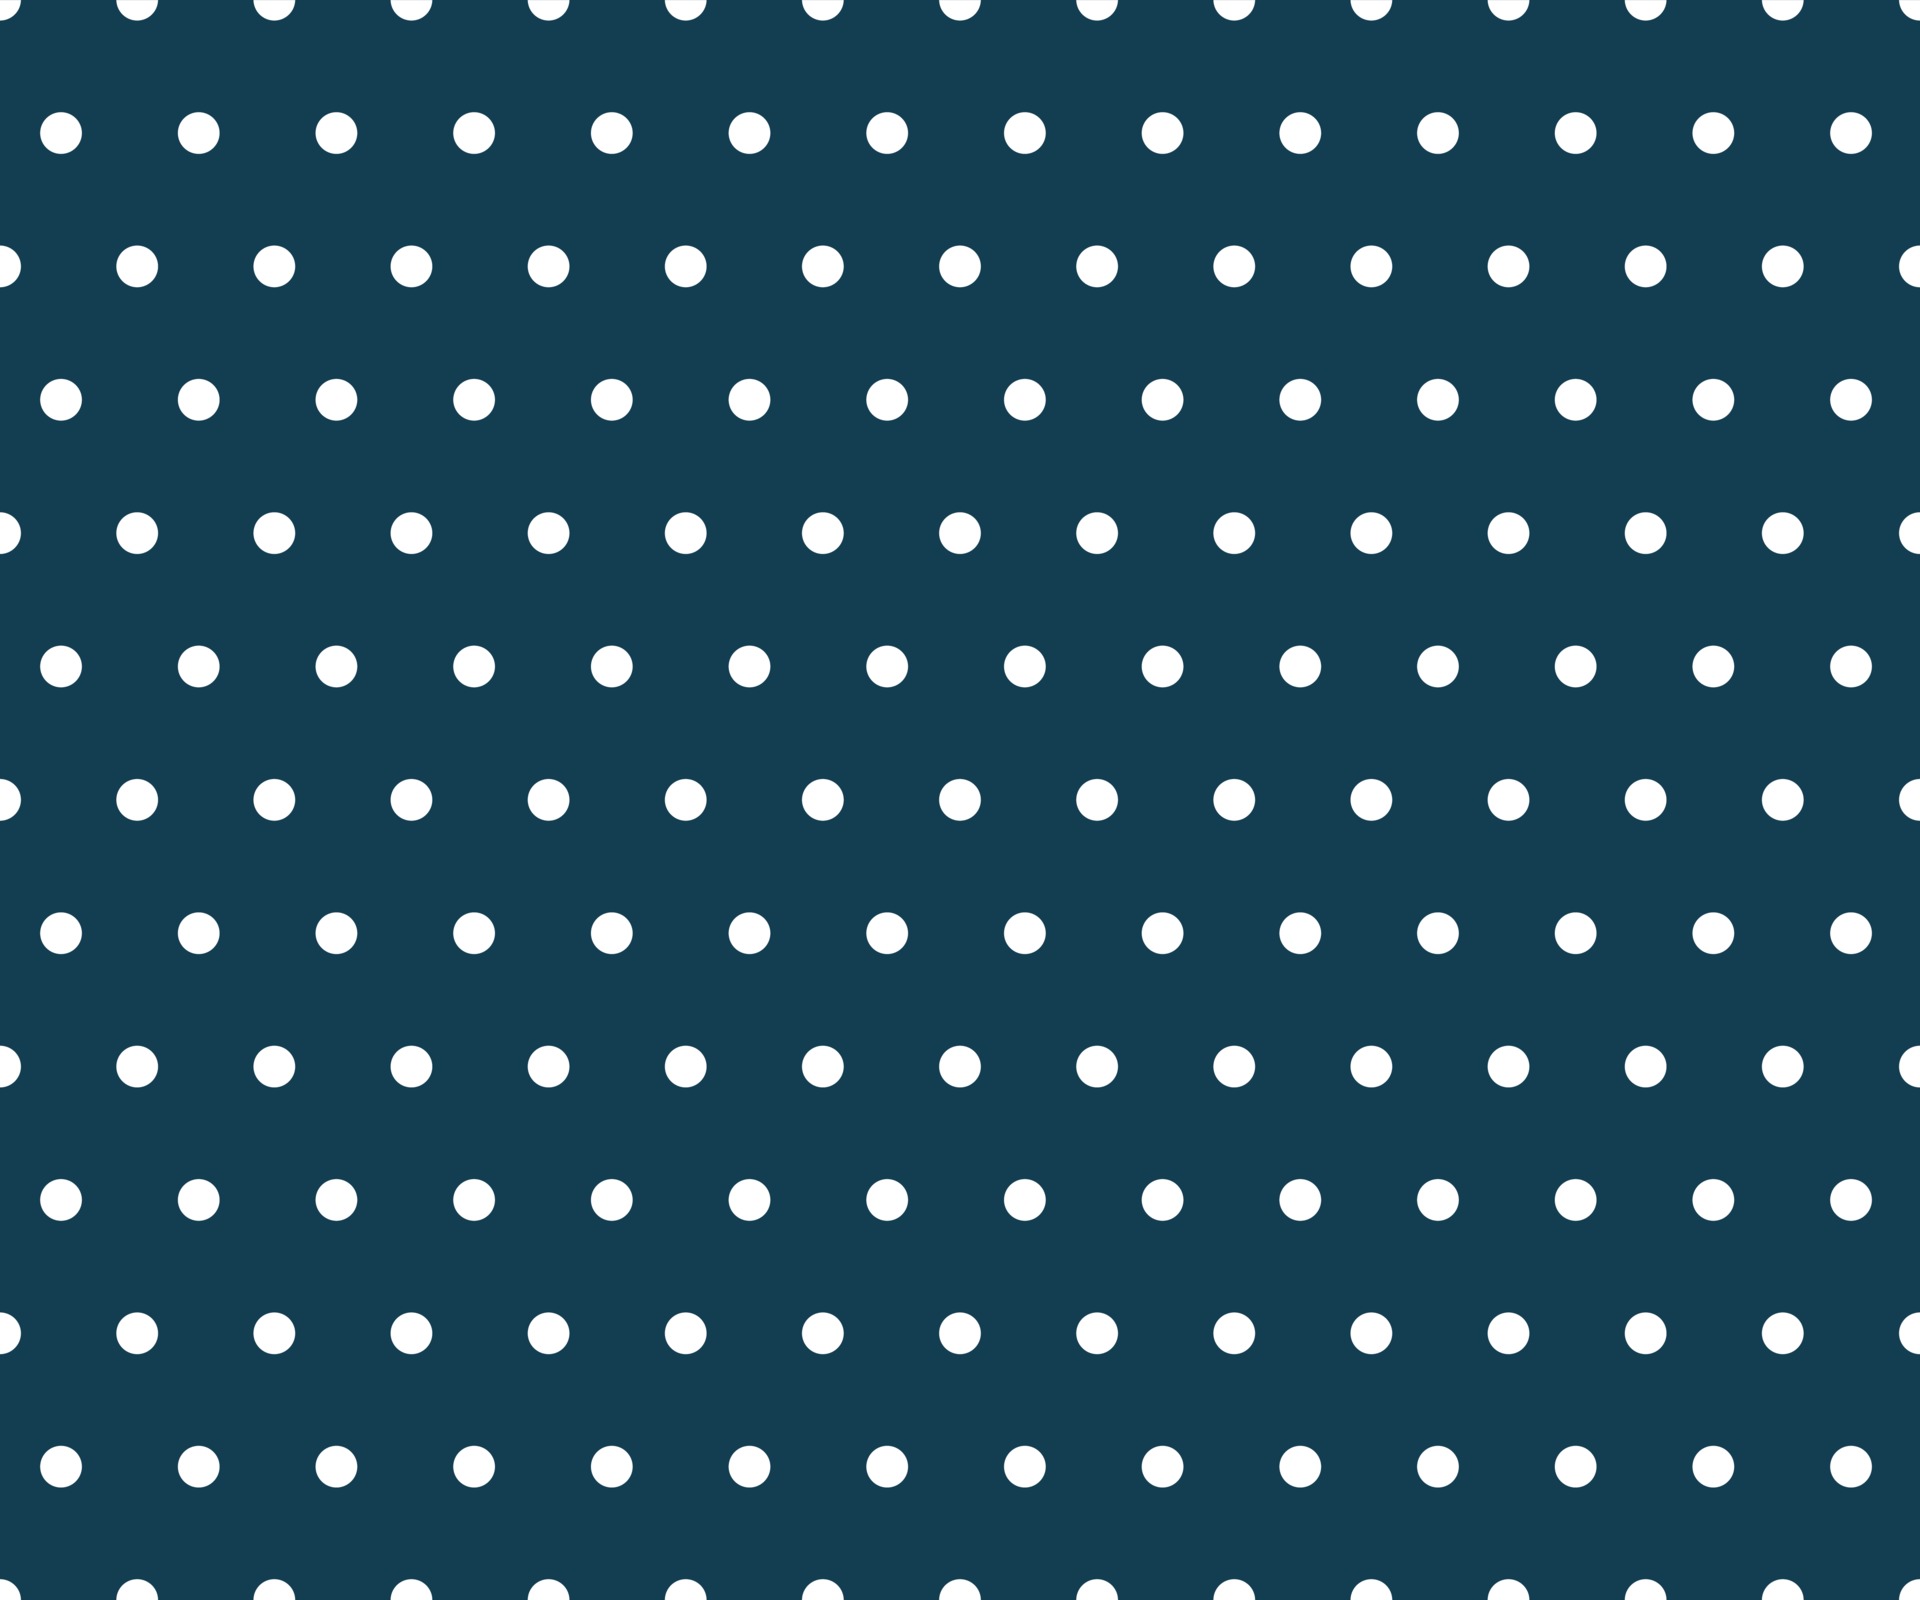 Blue Polka Dots Vector Art, Icons, and ...